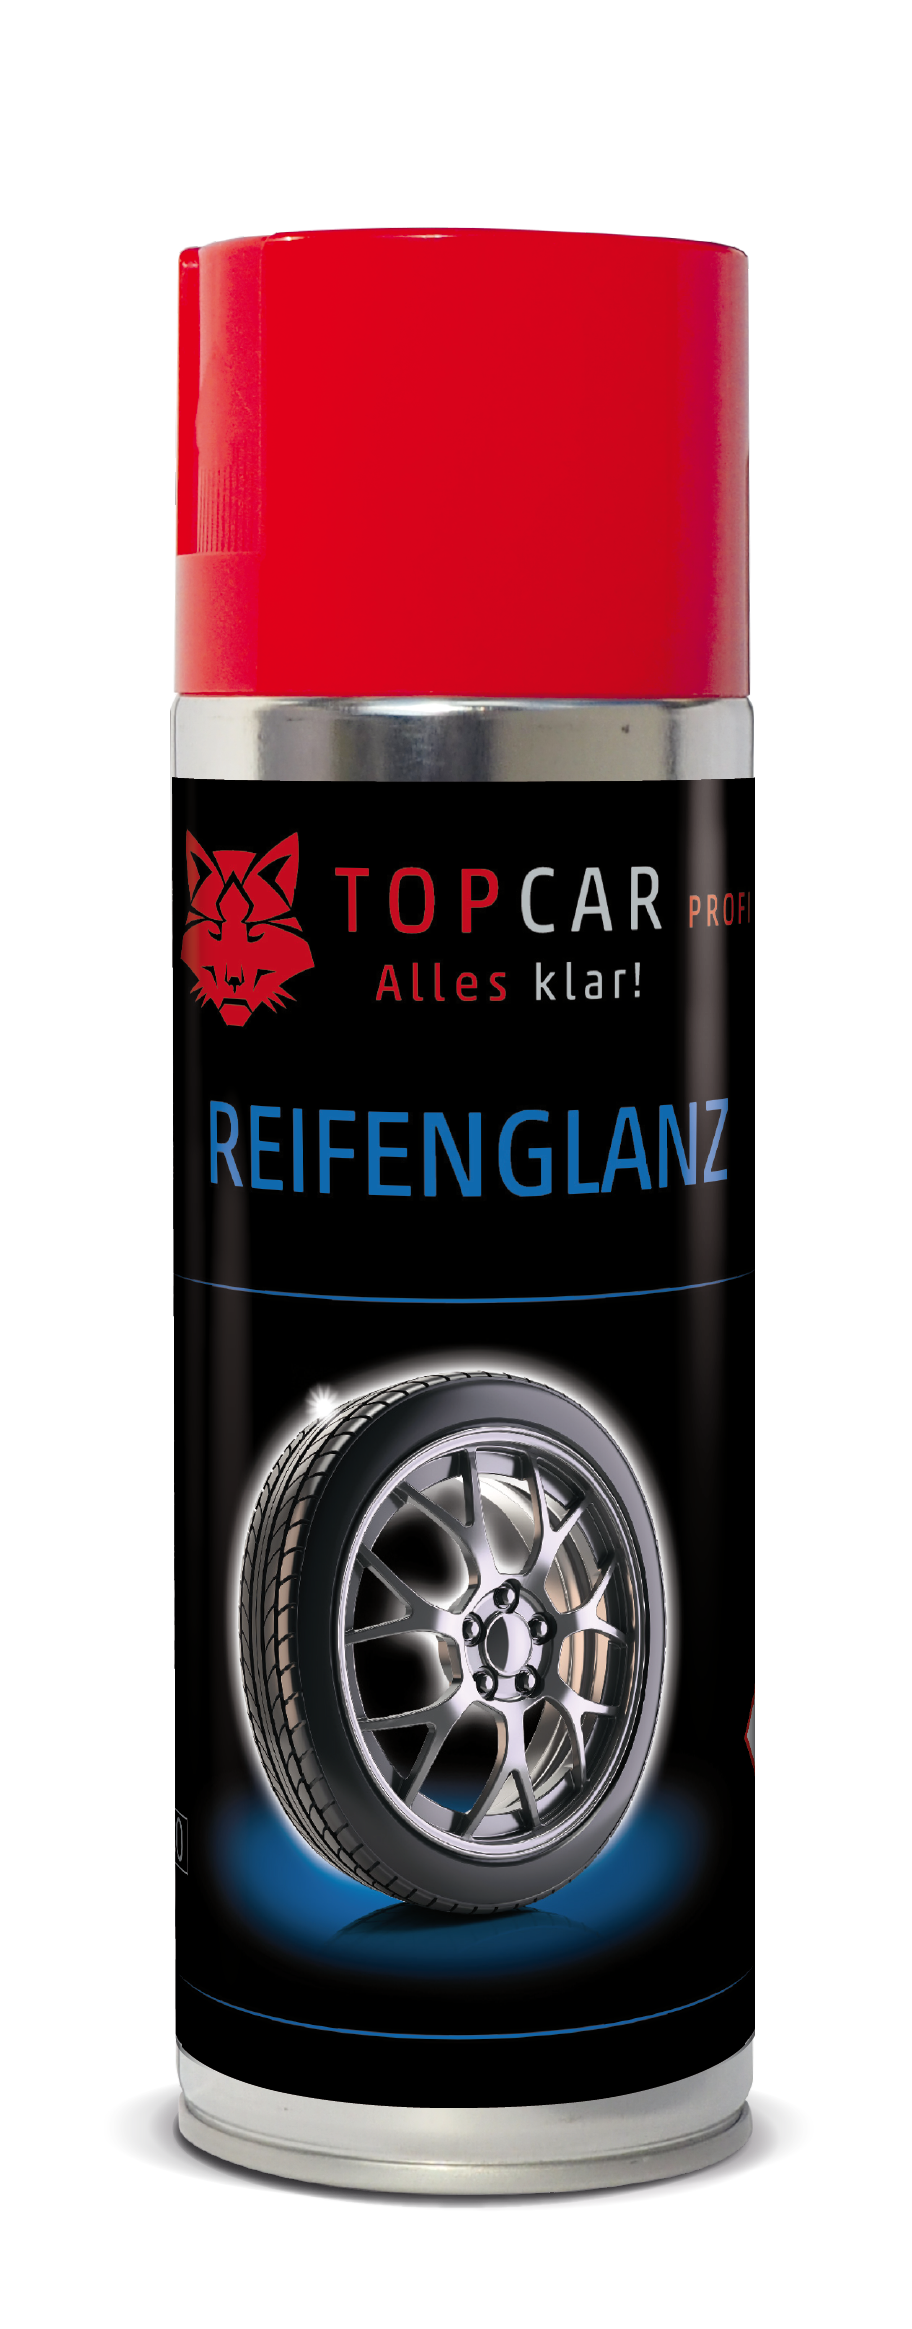 TOP CAR Reifenglanz mit Langzeitwirkung 400ml - Weigola Hygienevertrieb -  - Weigola Hygienevertrieb